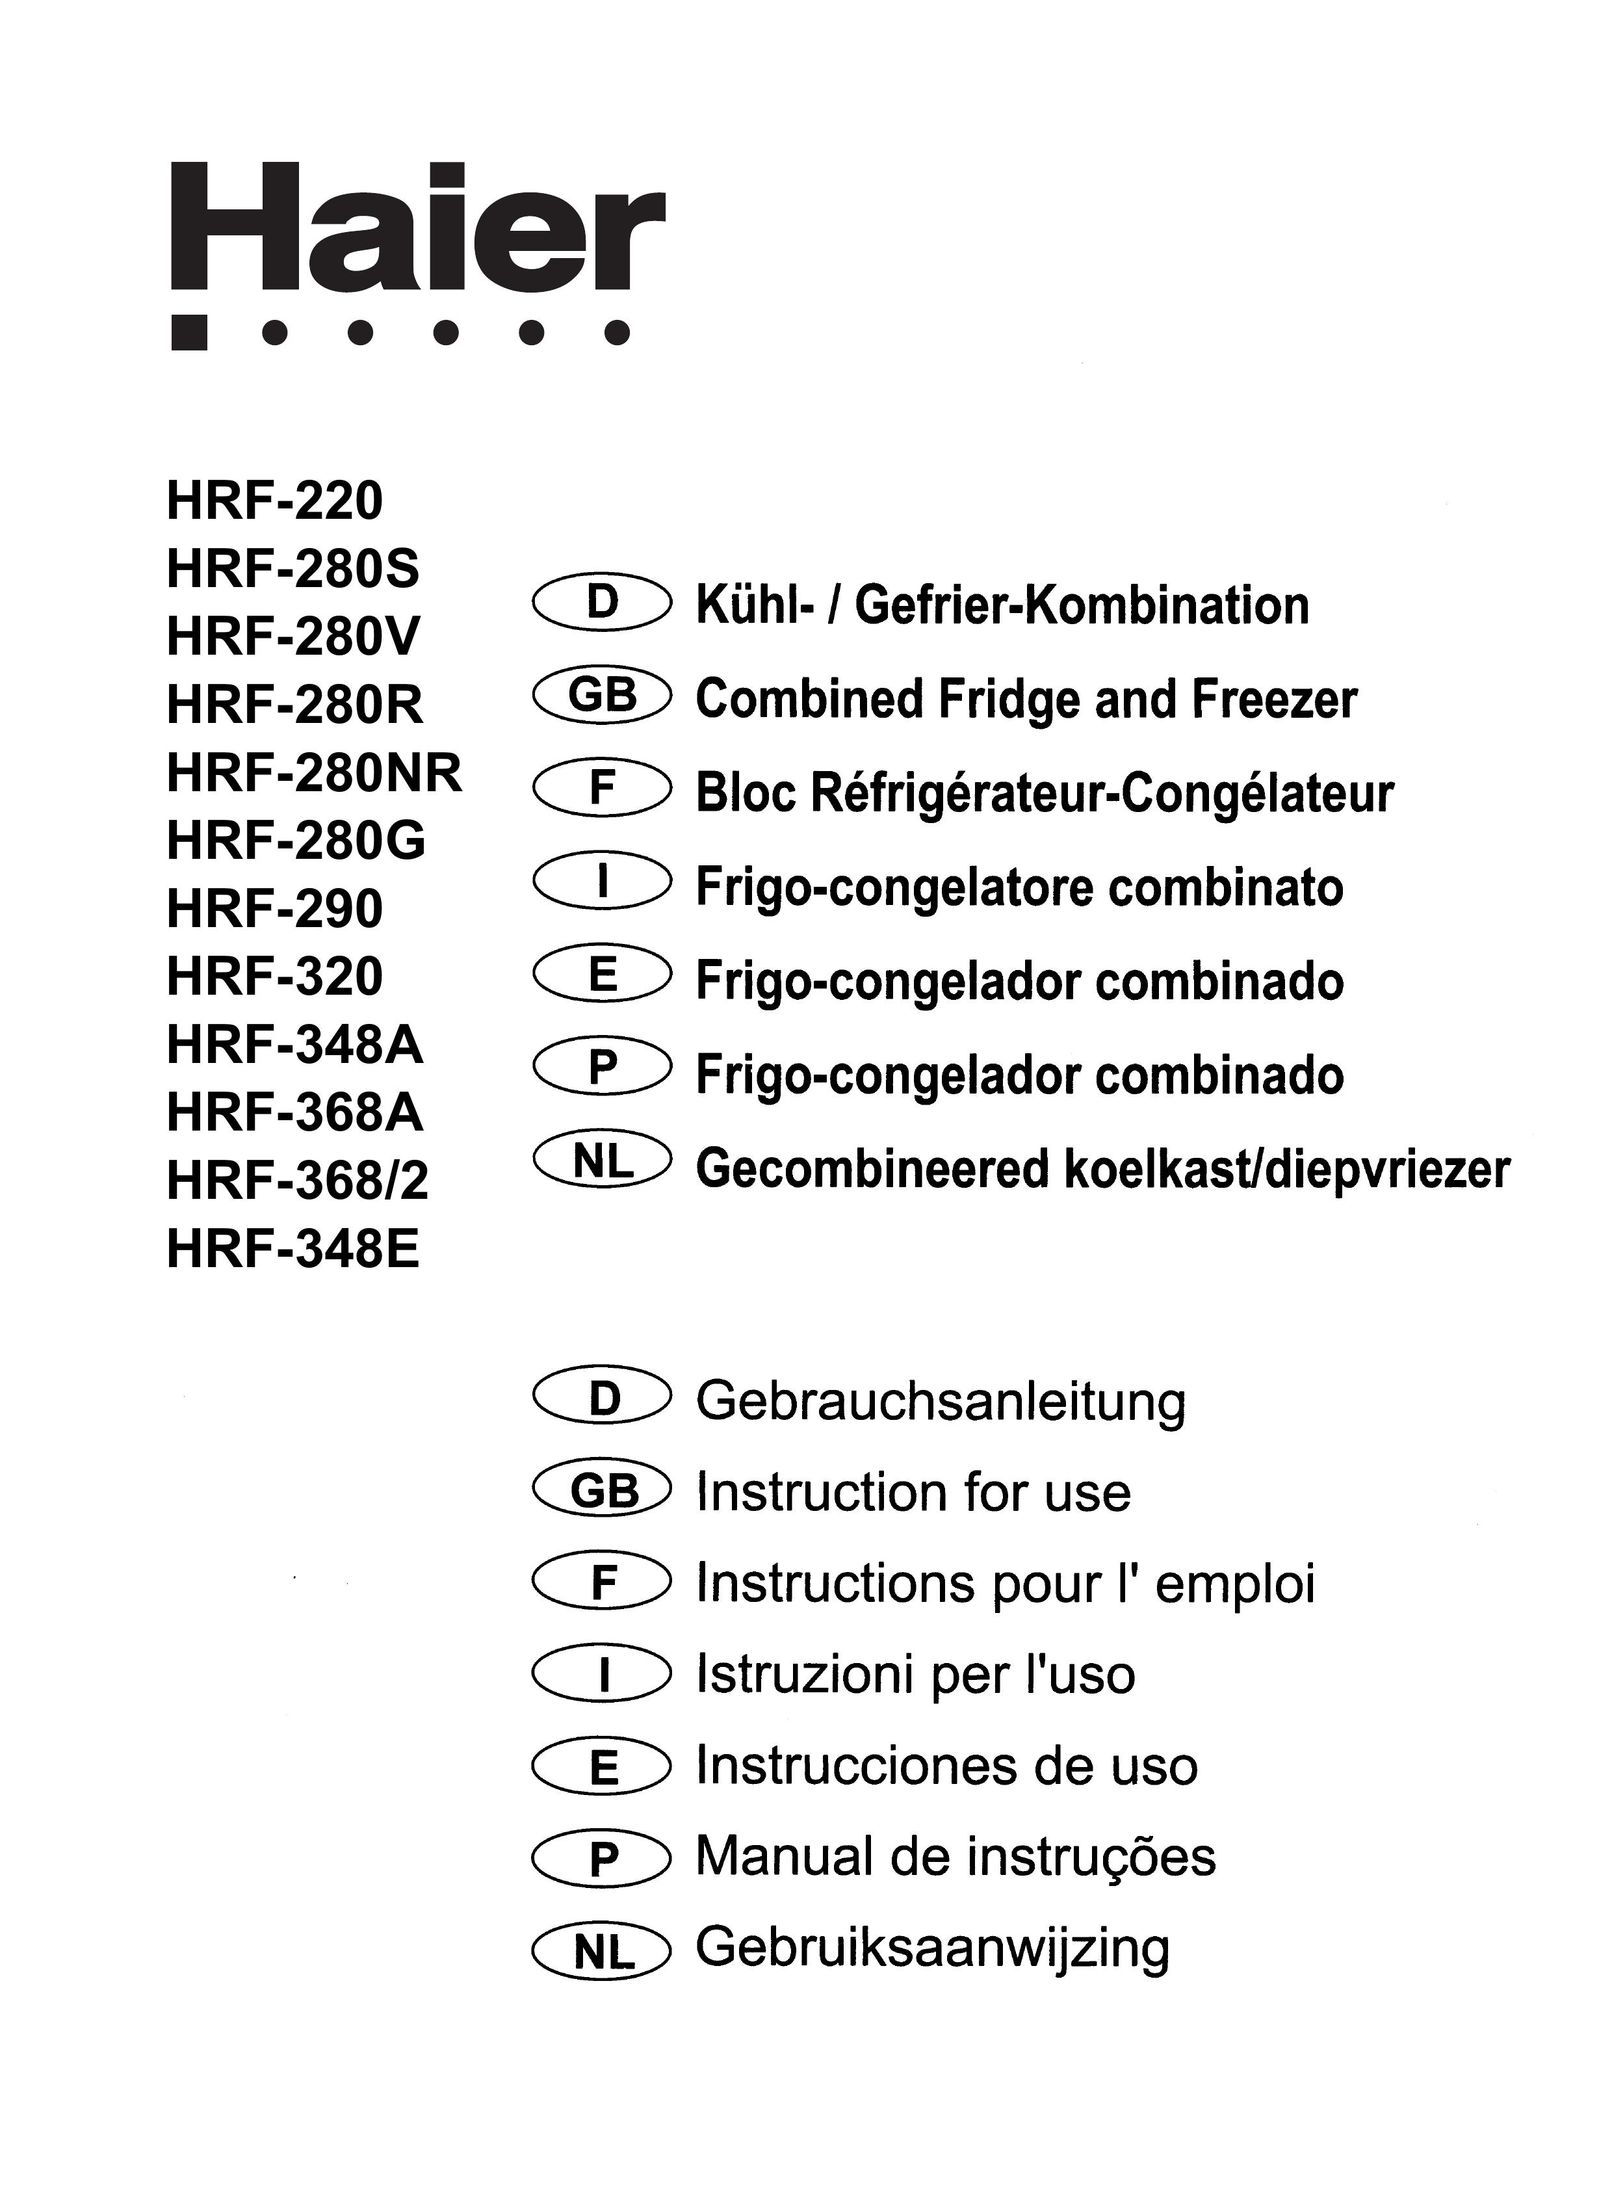 Haier HRF-368/2 Saw User Manual